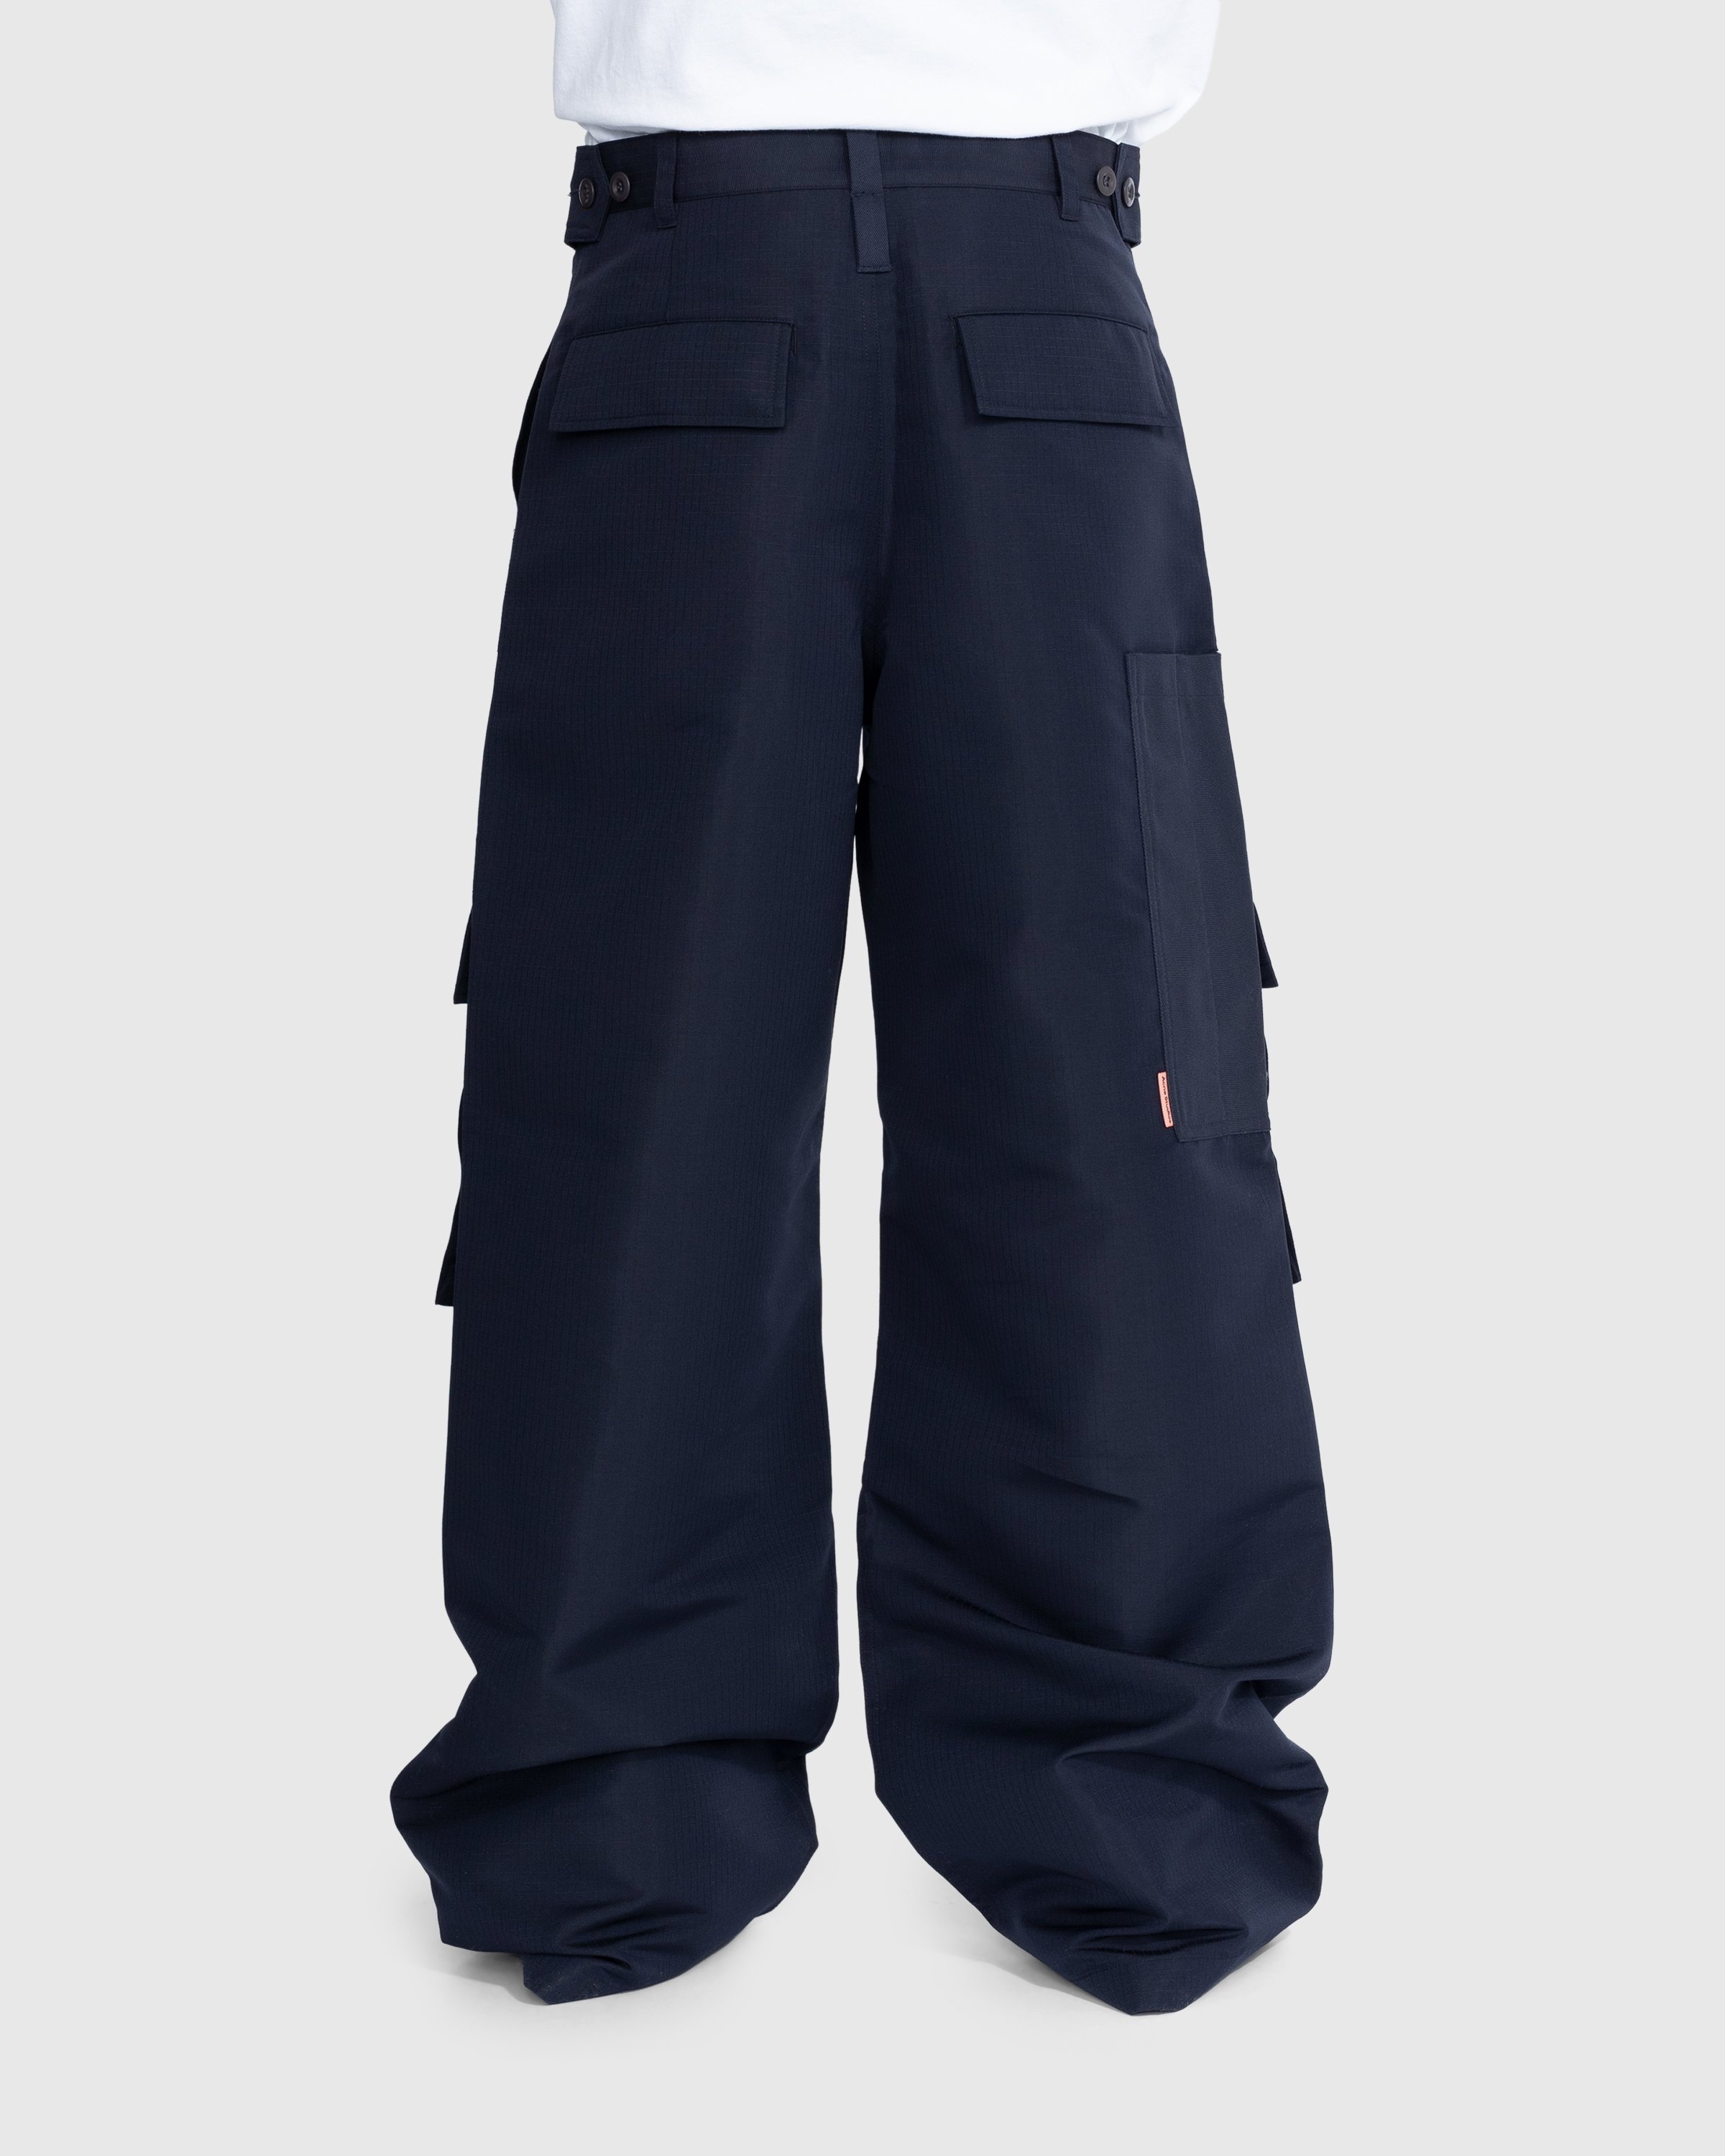 Acne Studios – Ripstop Cargo Trousers Dark Blue - Cargo Pants - Black - Image 4